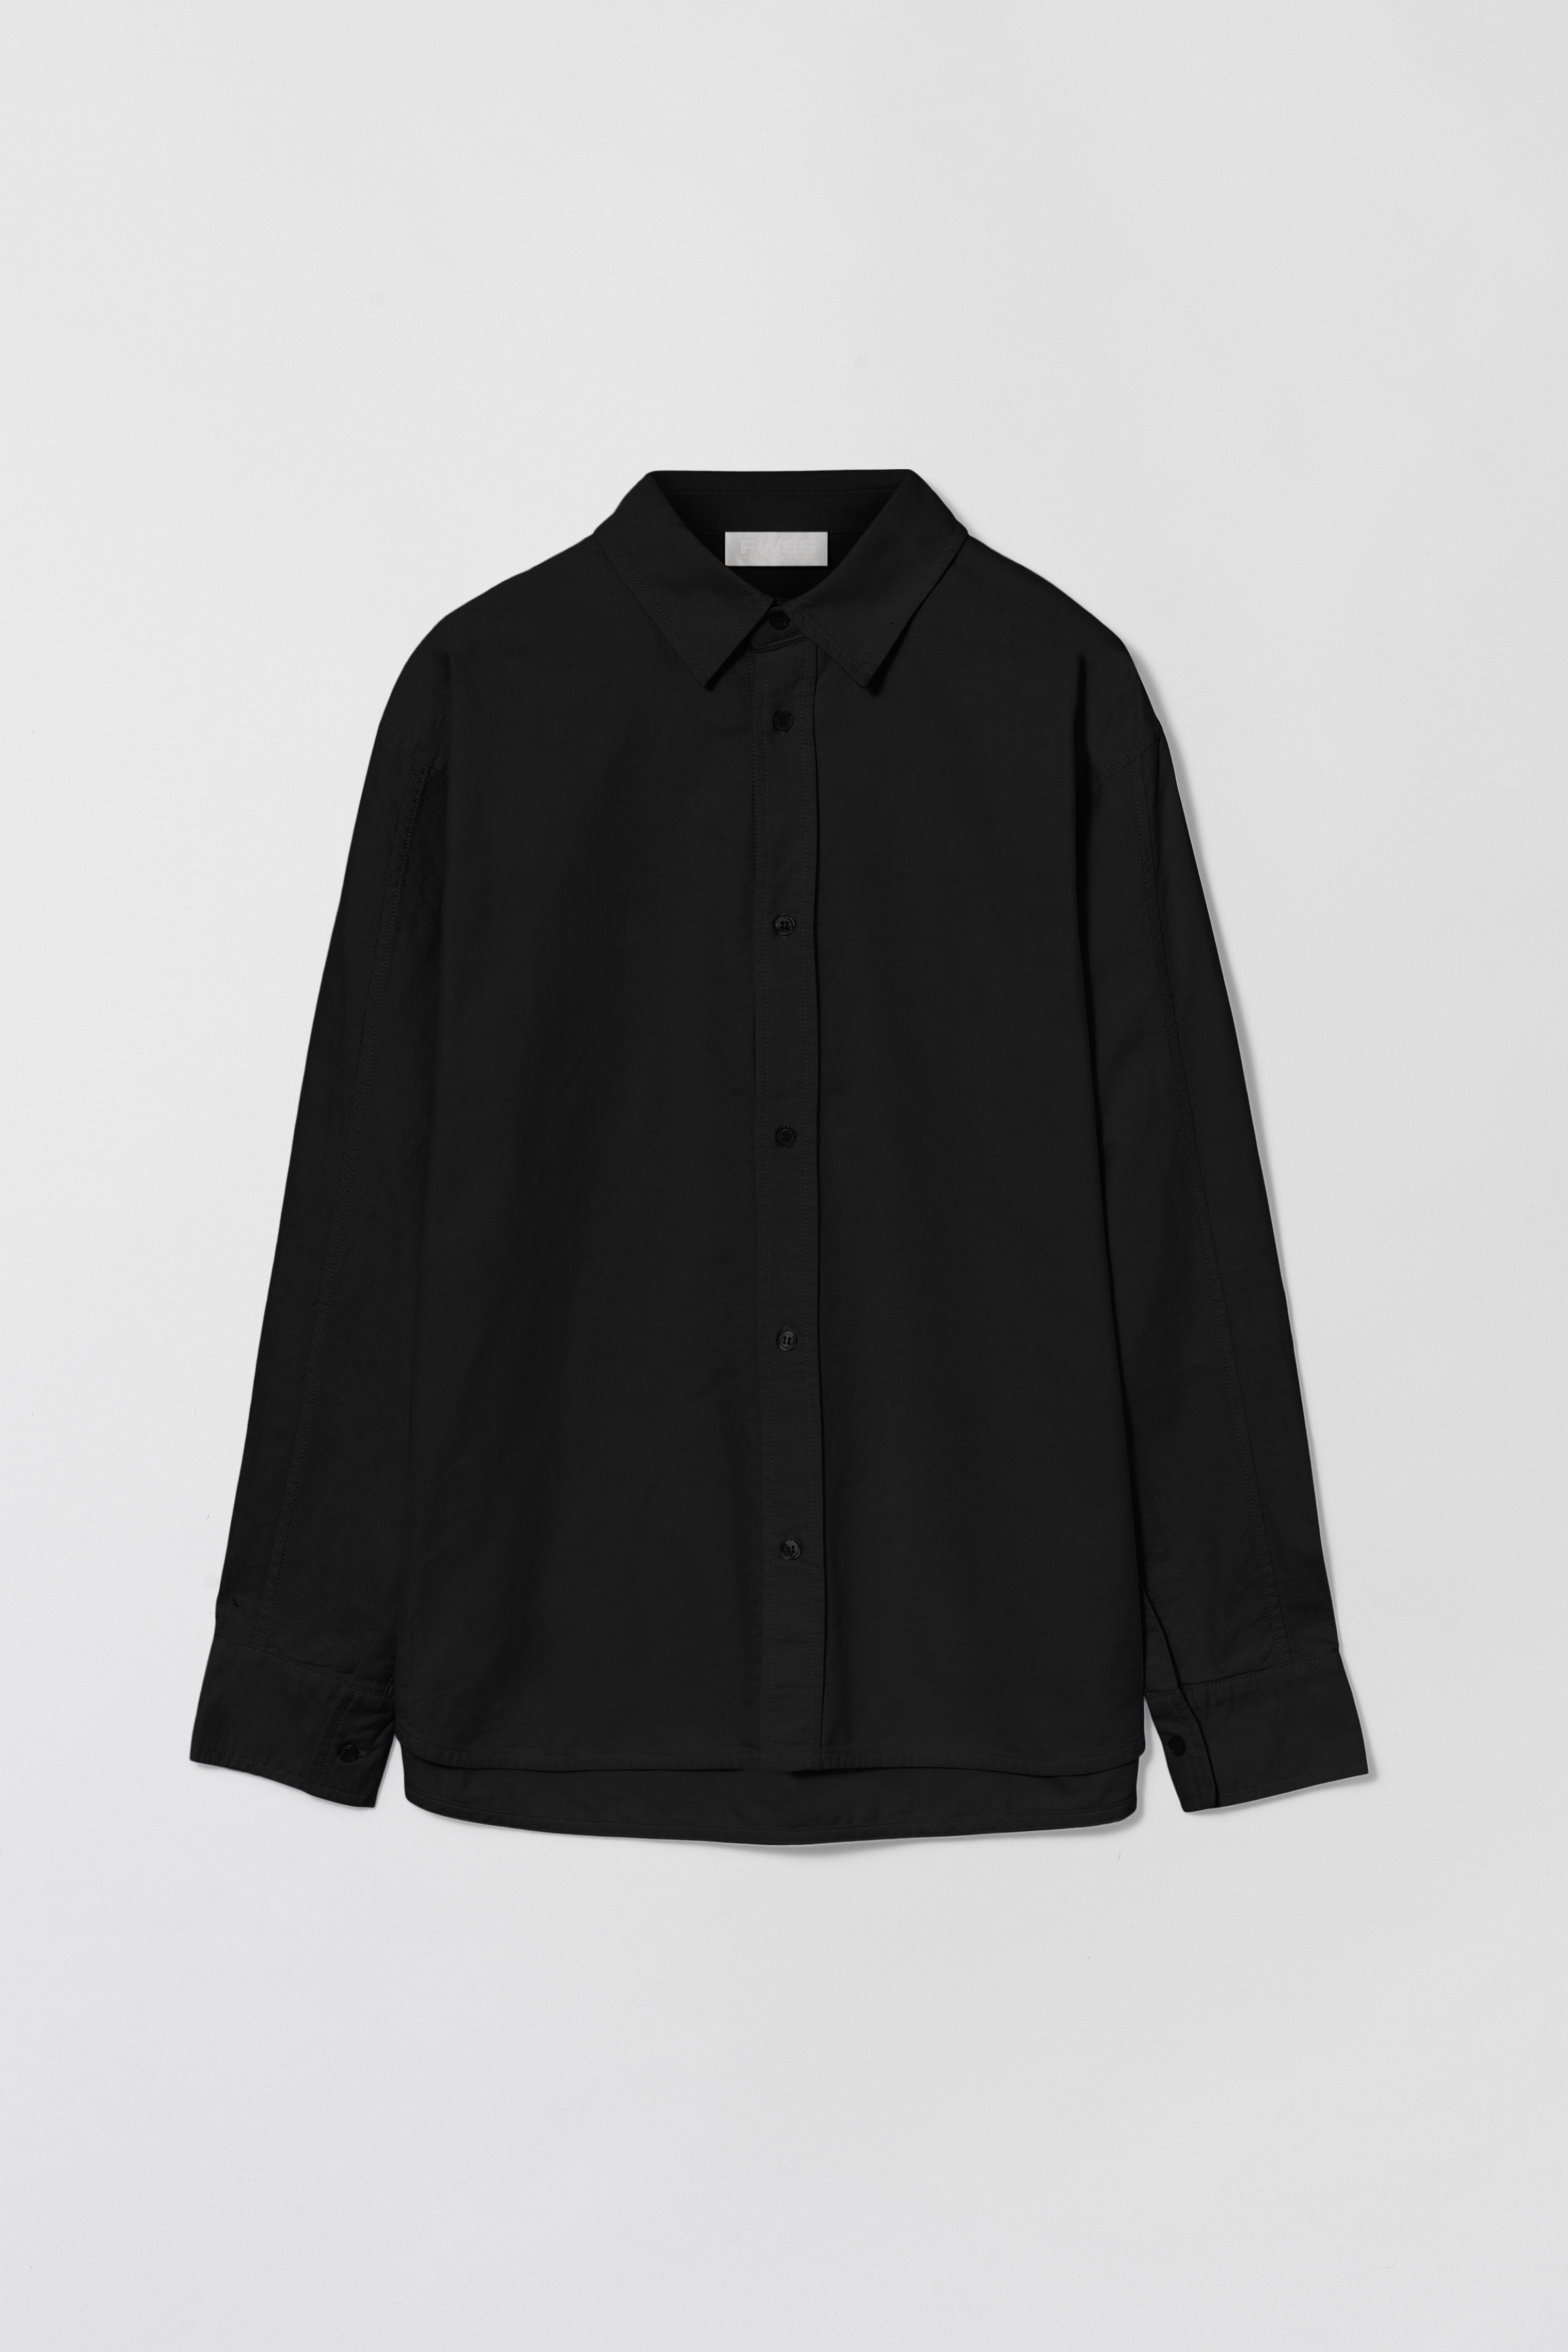 FWSS_Oxford_Costal_Shirt_Black5_1